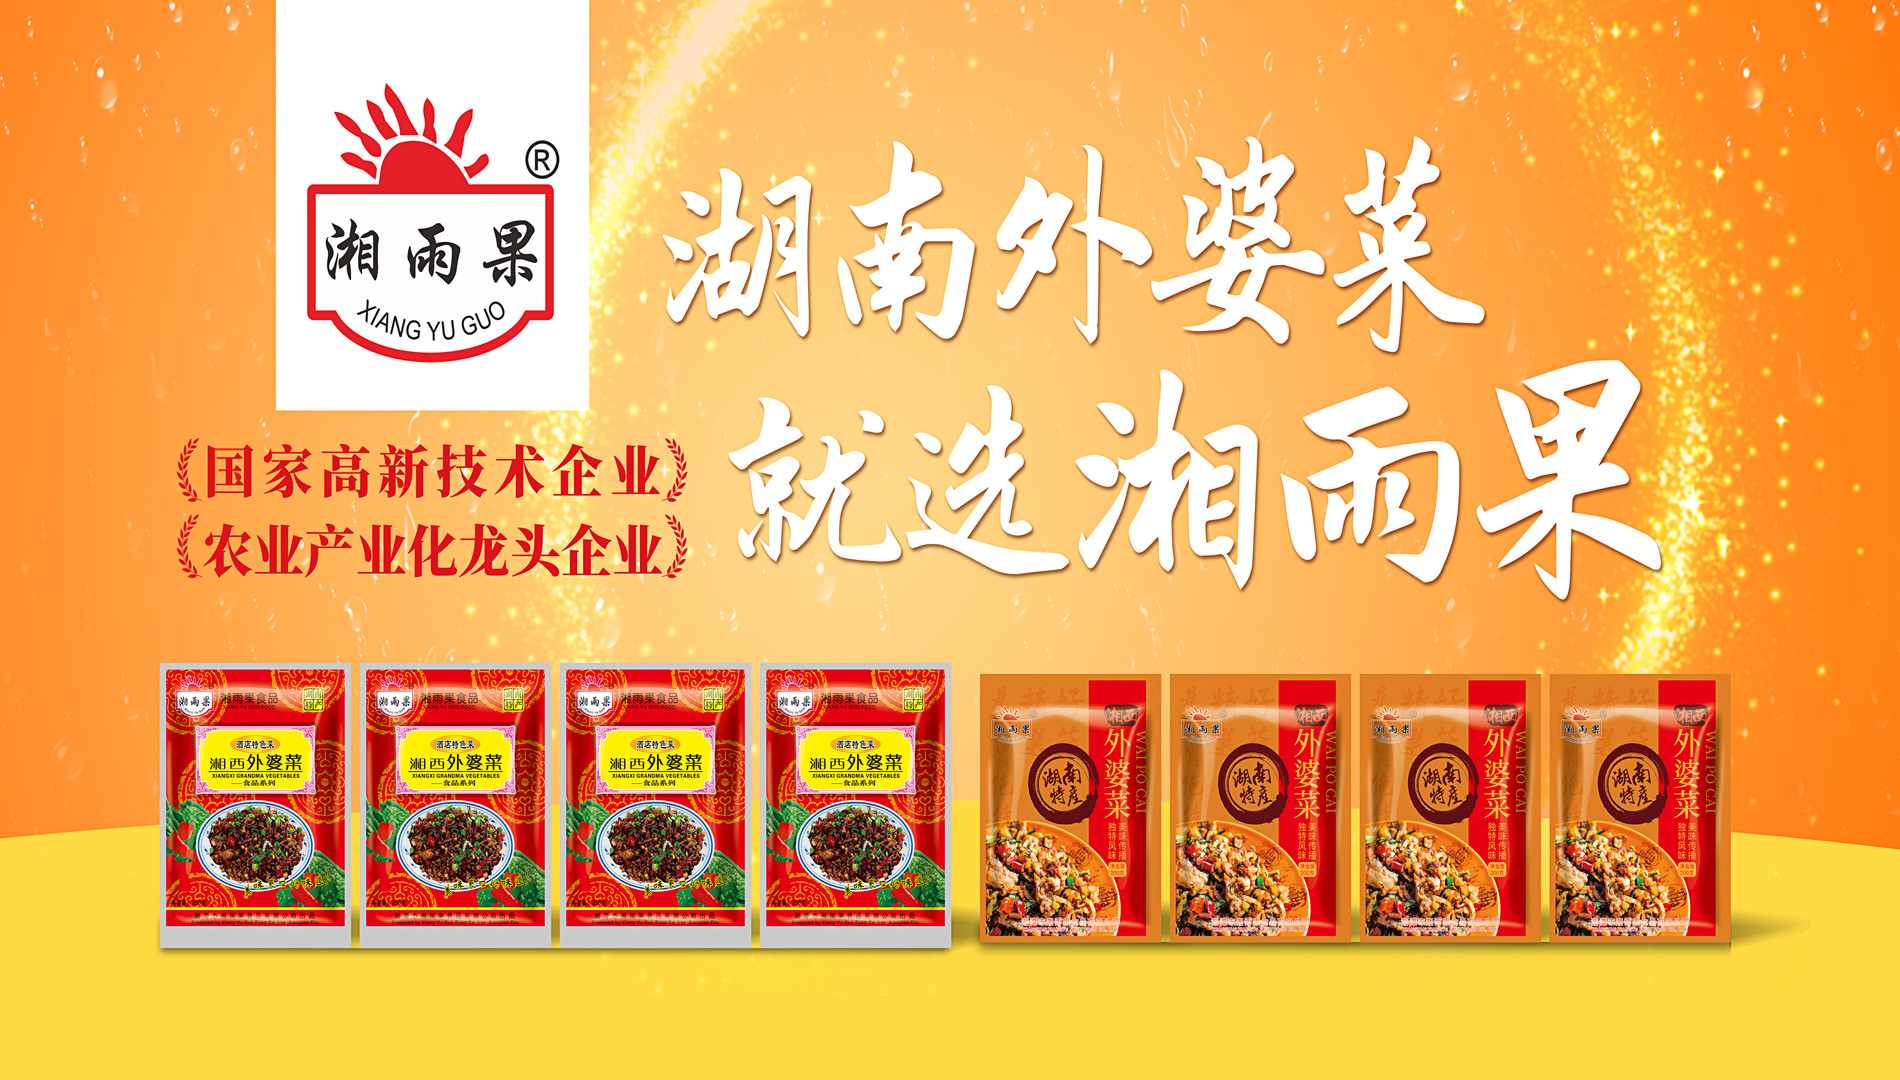 Xiang Yu Guo Food—Benchmark Enterprise vun der Pre-made Dishes Industrie